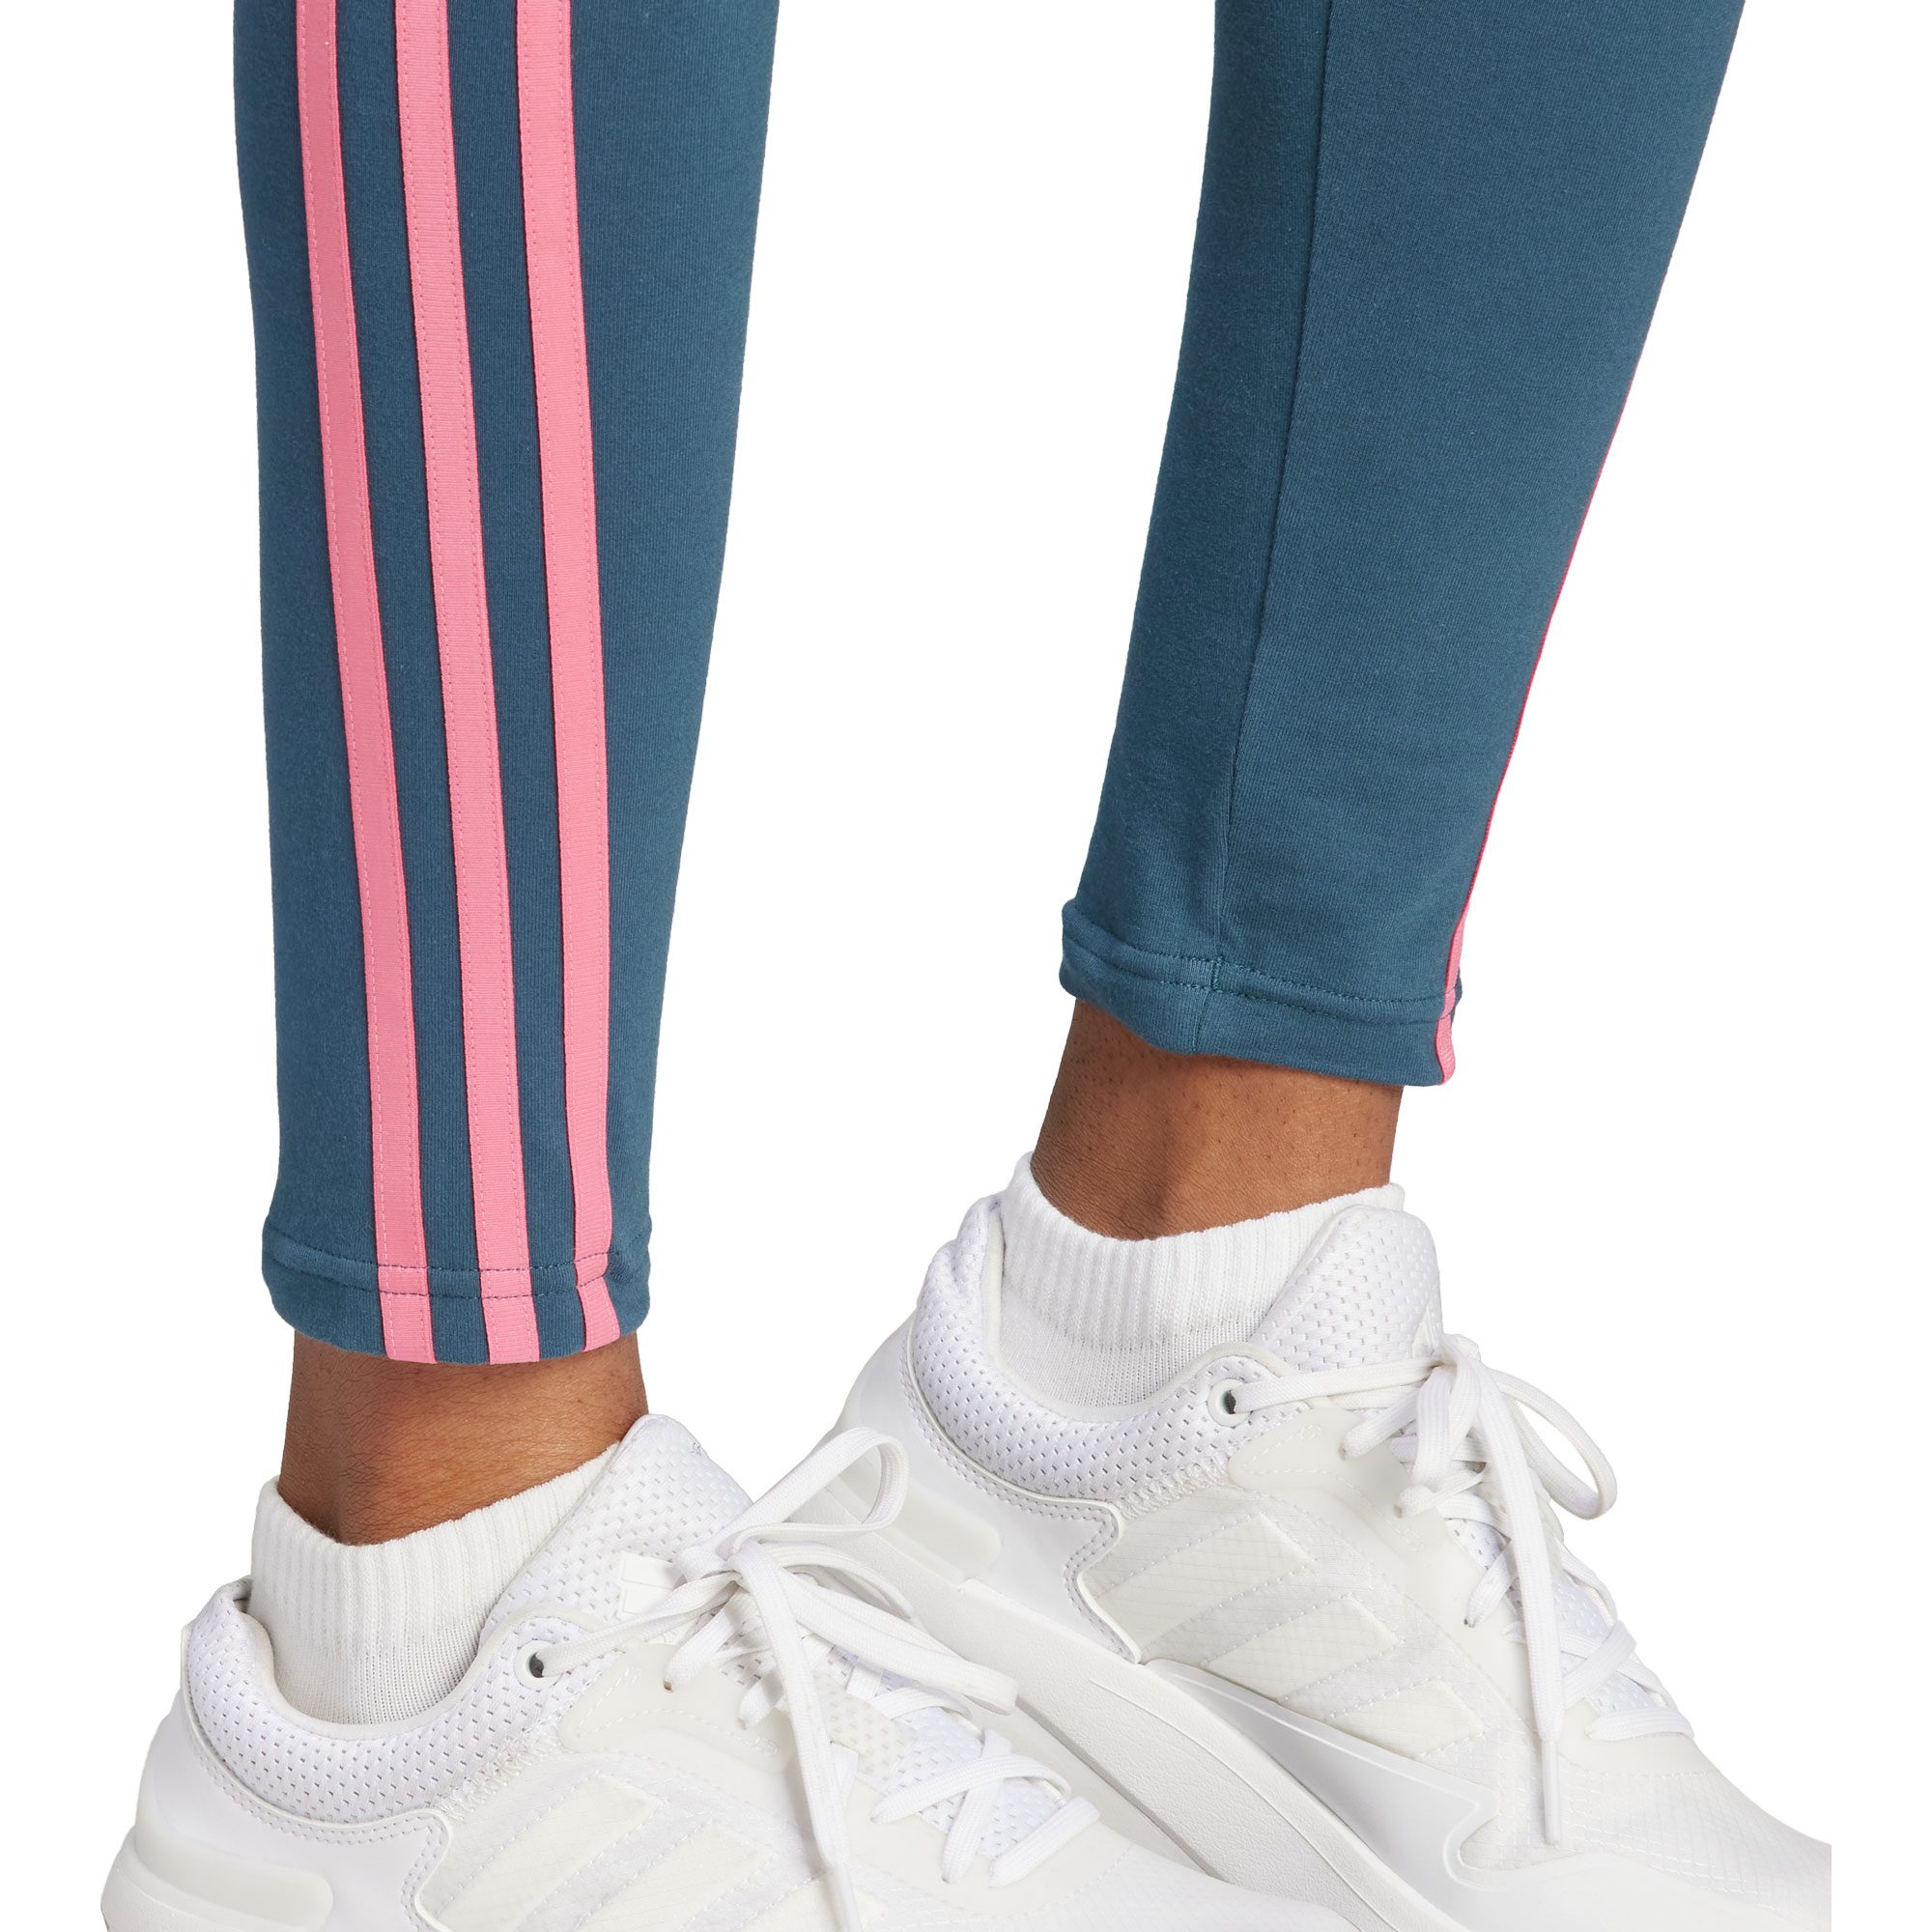 Future at Leggings - adidas Women Bittl night Icons 3-Stripes Shop arctic Sport